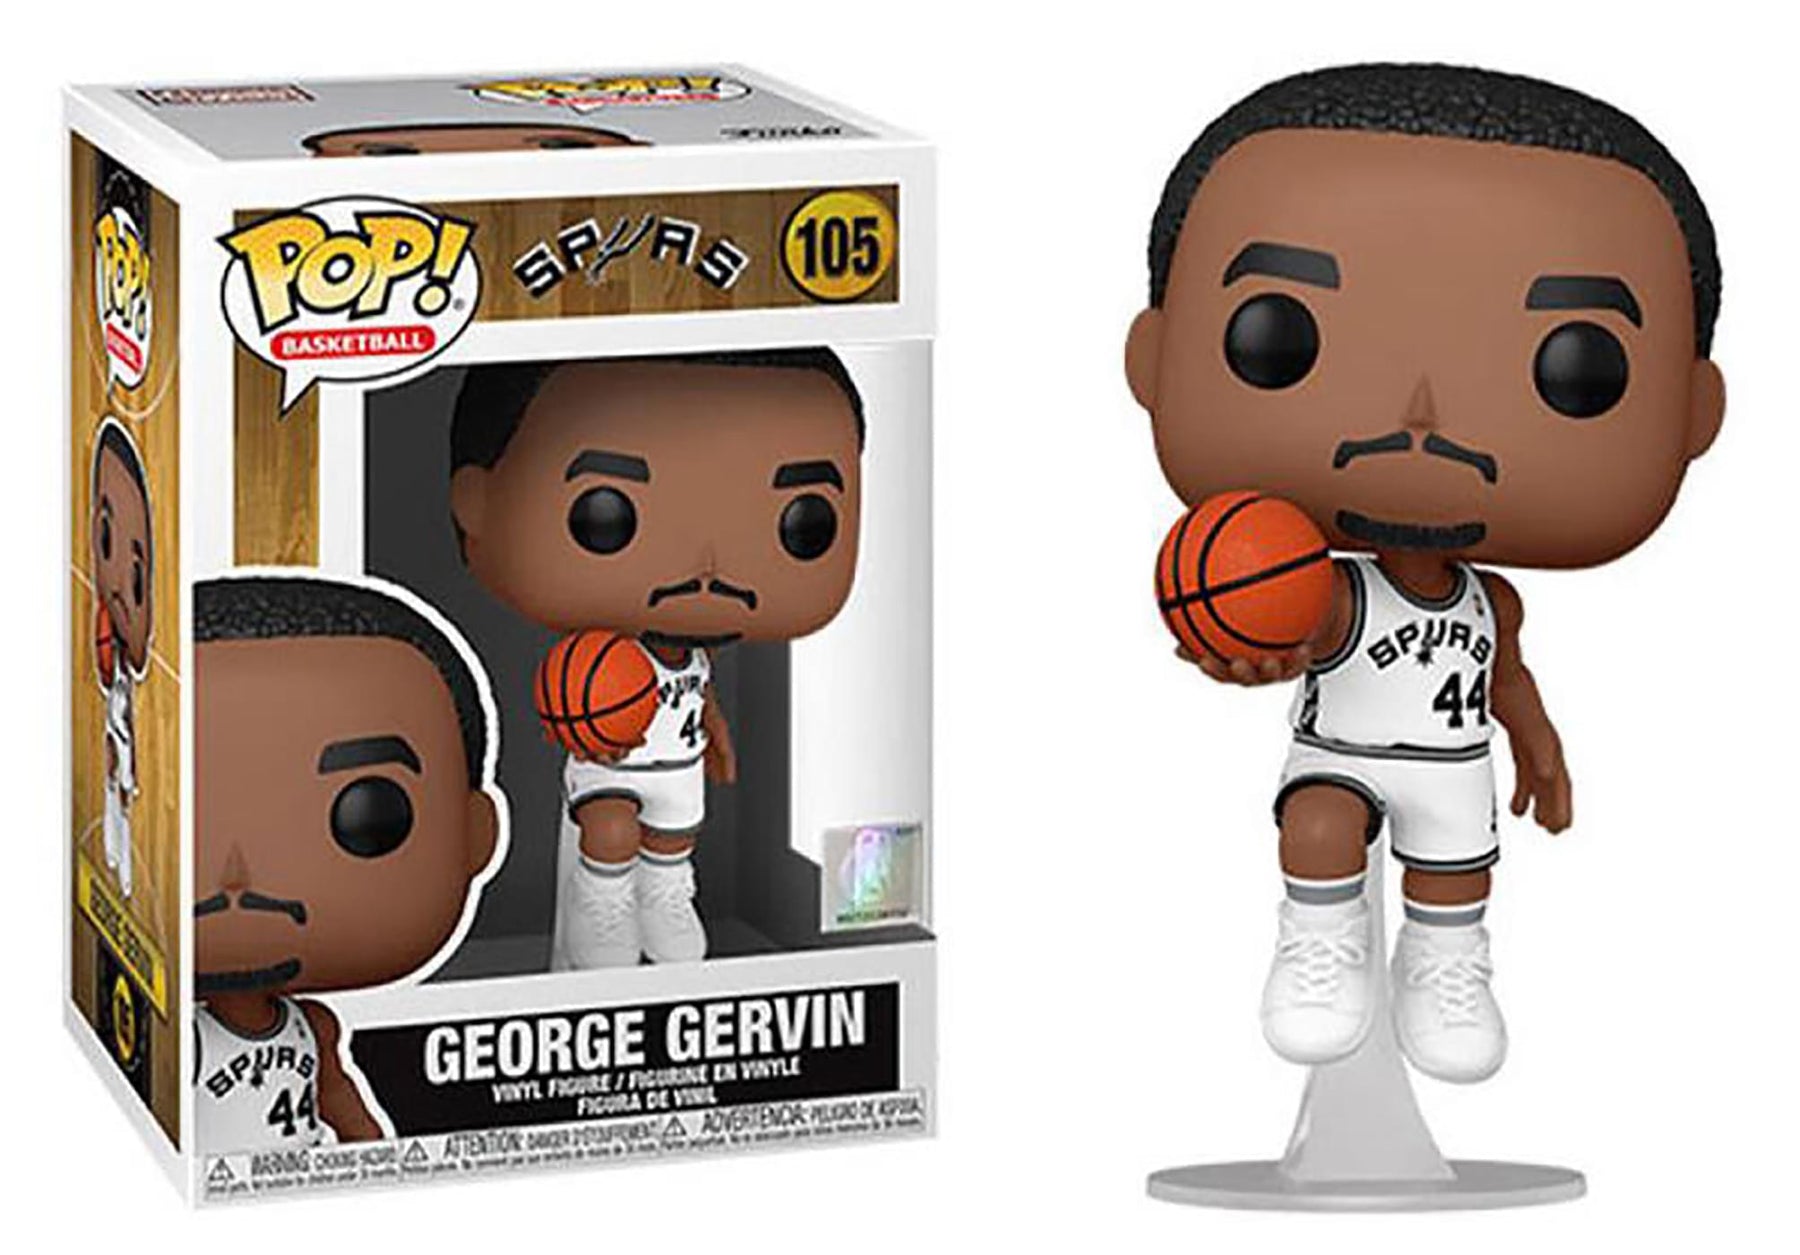 San Antonio Spurs NBA Funko POP Vinyl Figure | George Gervin